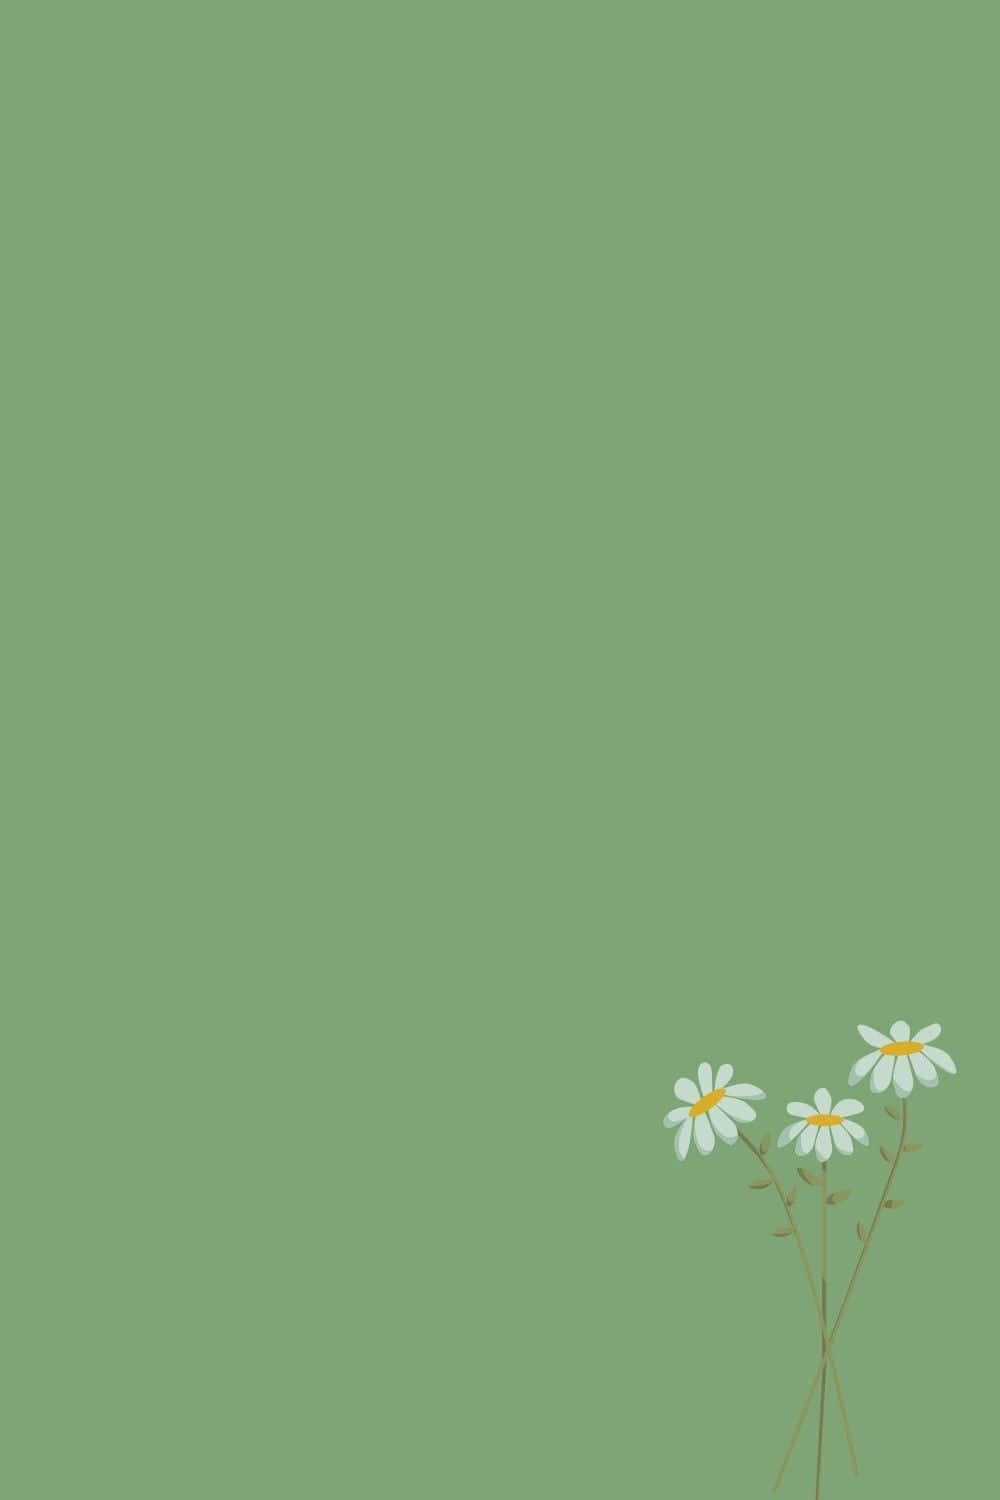 Premium Vector  Cute small daisy floral seamless pattern green pastel  wallpaper